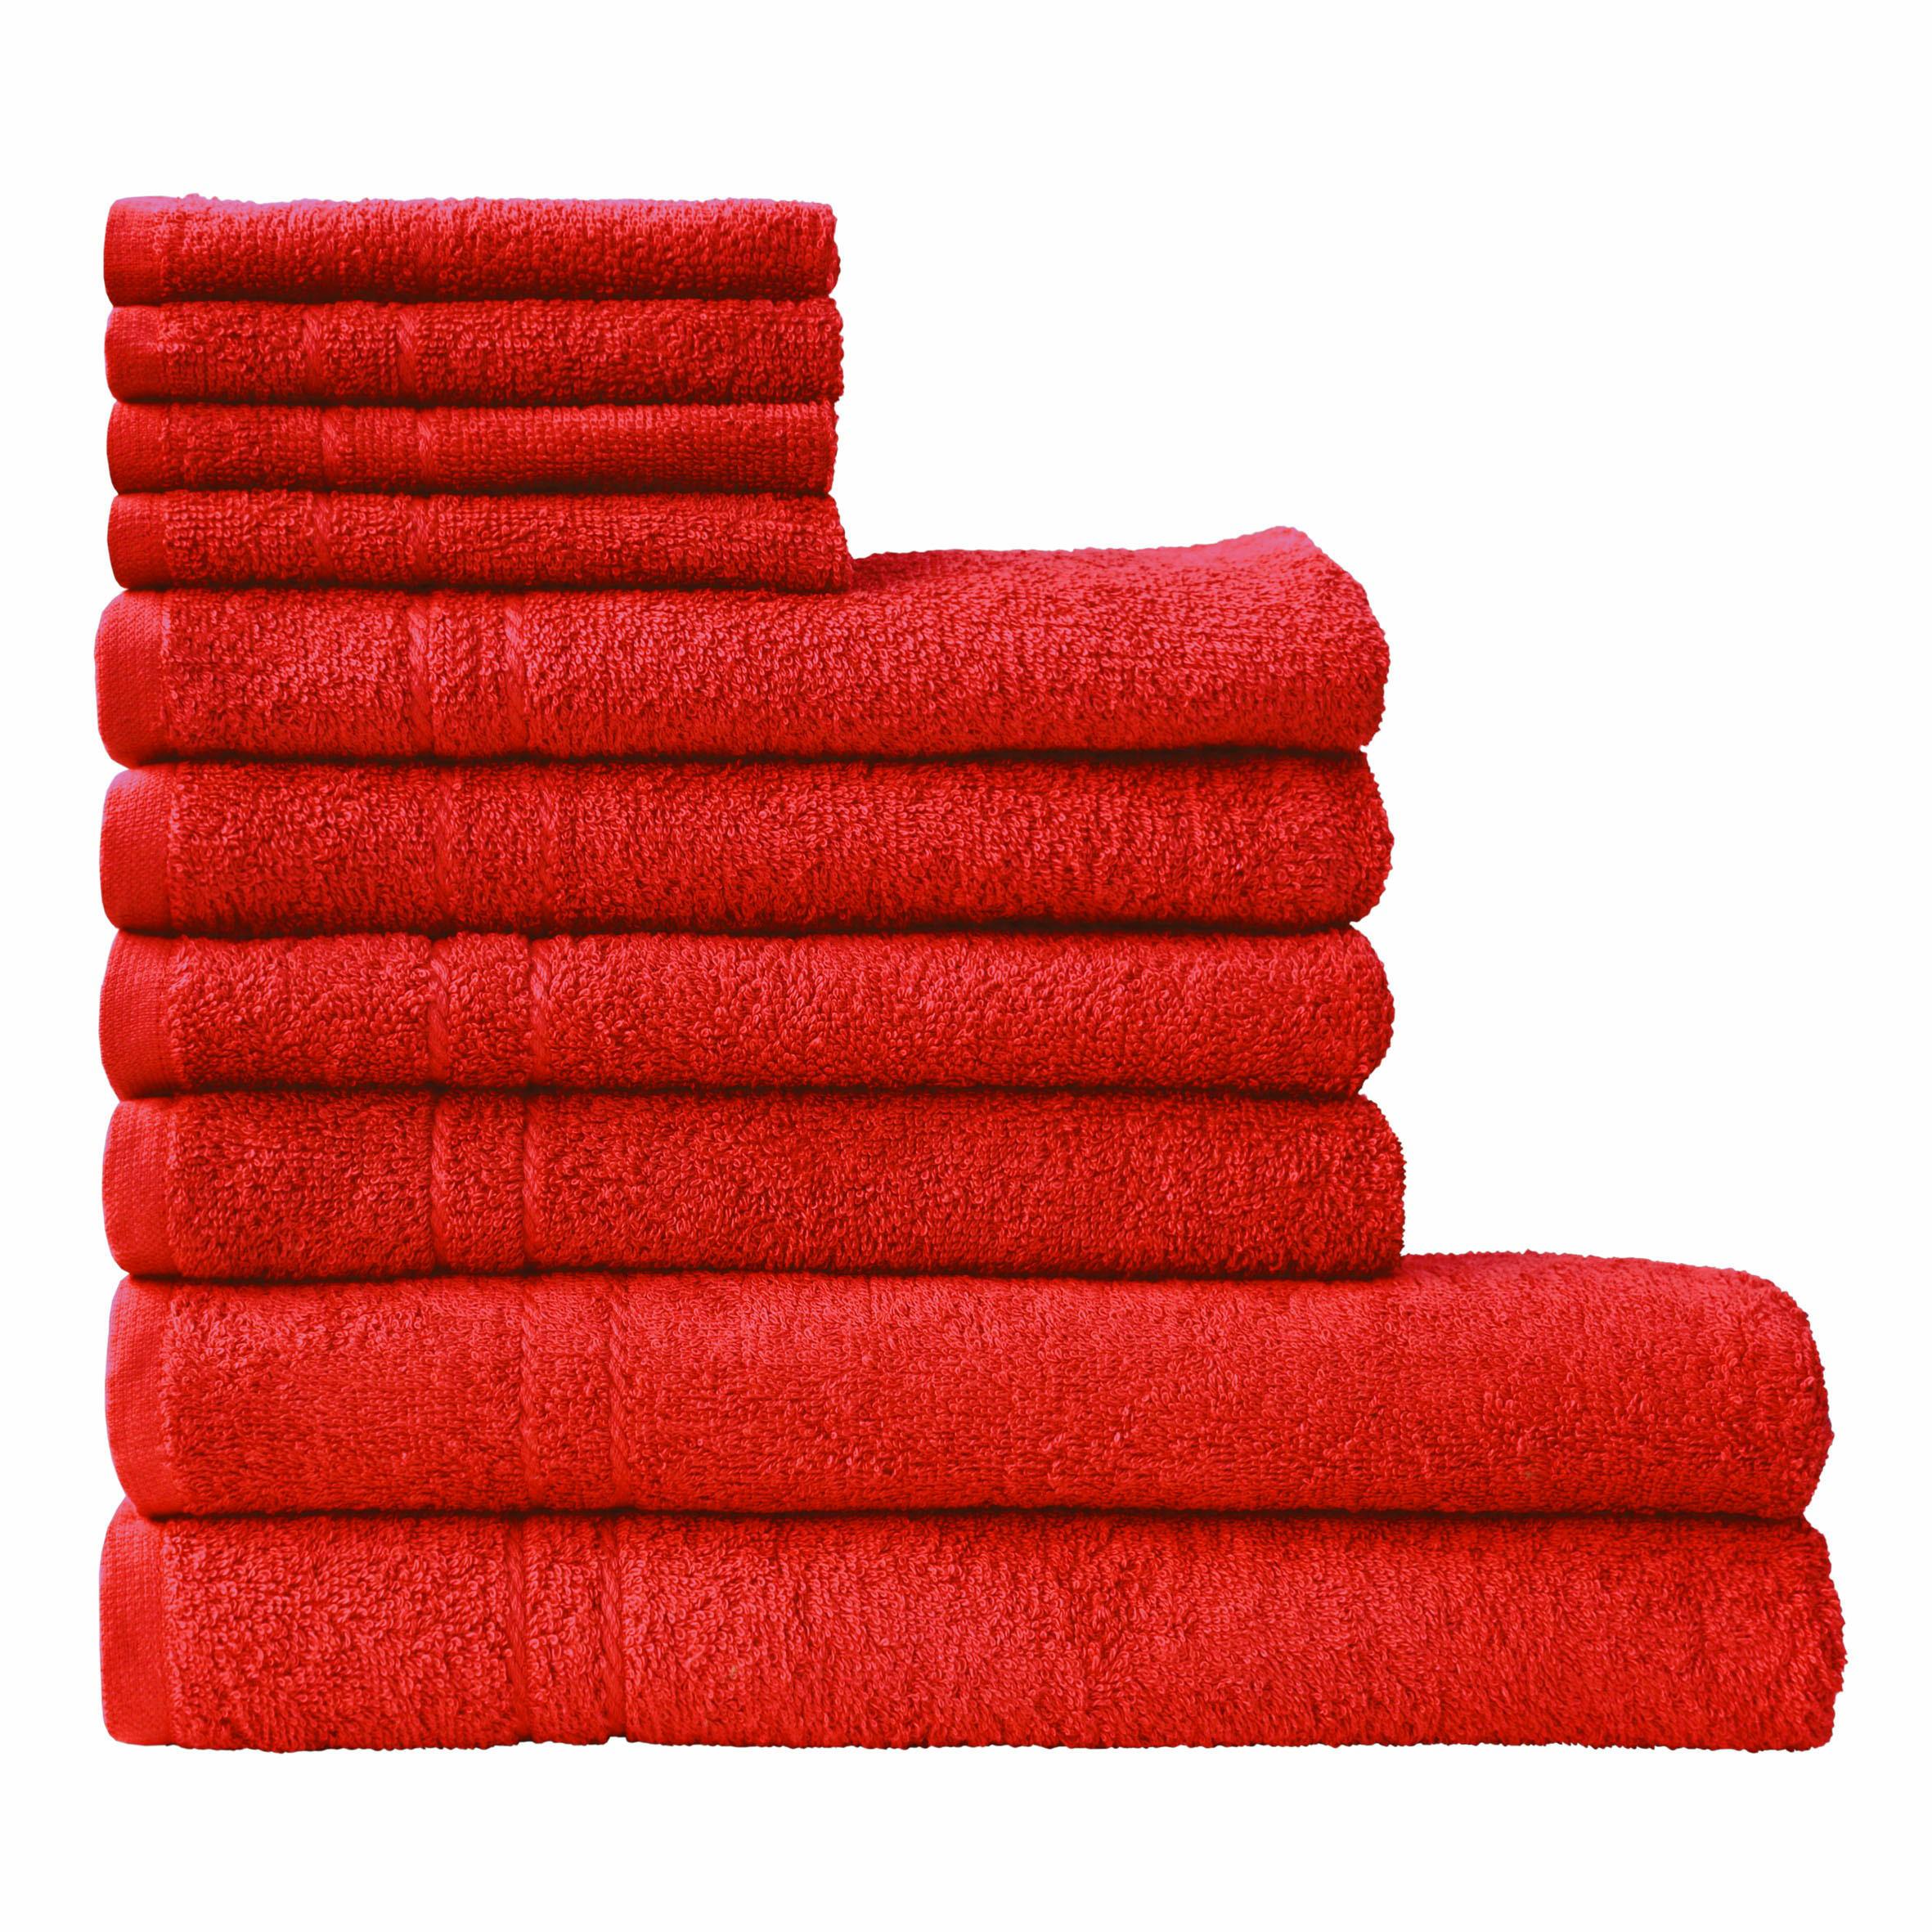 Dyckhoff Handtuch Set Kristall, Set, 10 tlg., Walkfrottee, mit feiner Bordüre rot Handtuch-Sets Handtücher Badetücher